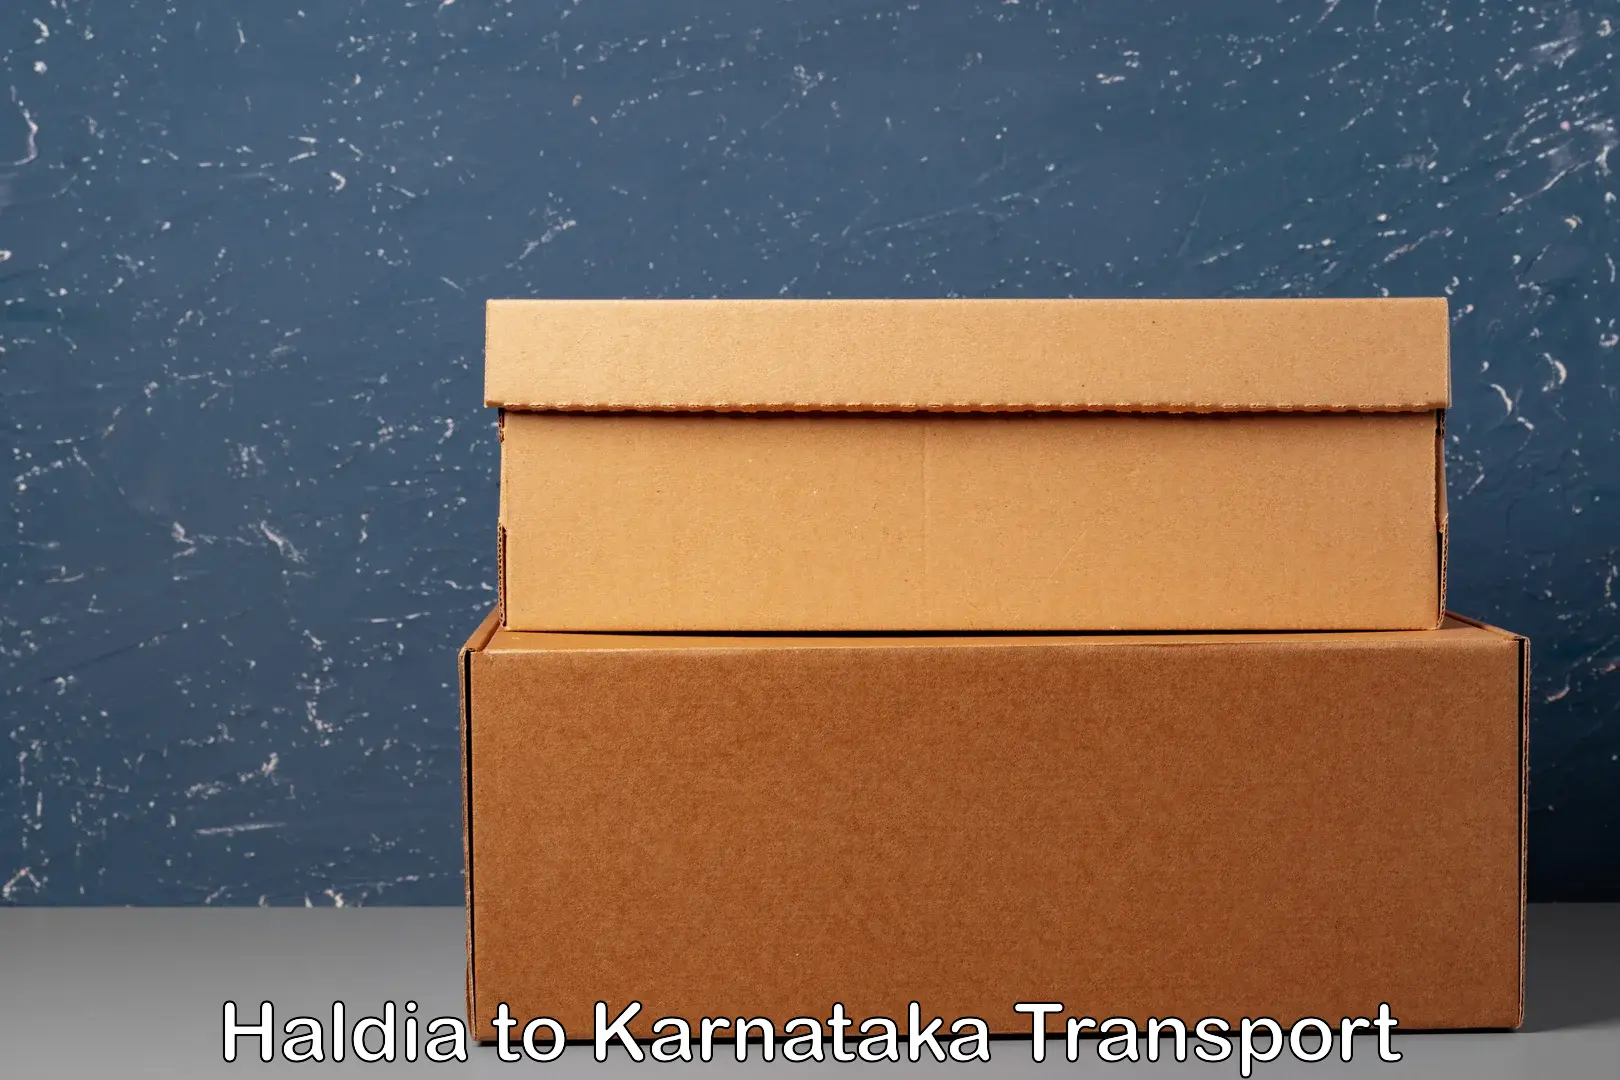 Transport shared services Haldia to Karnataka